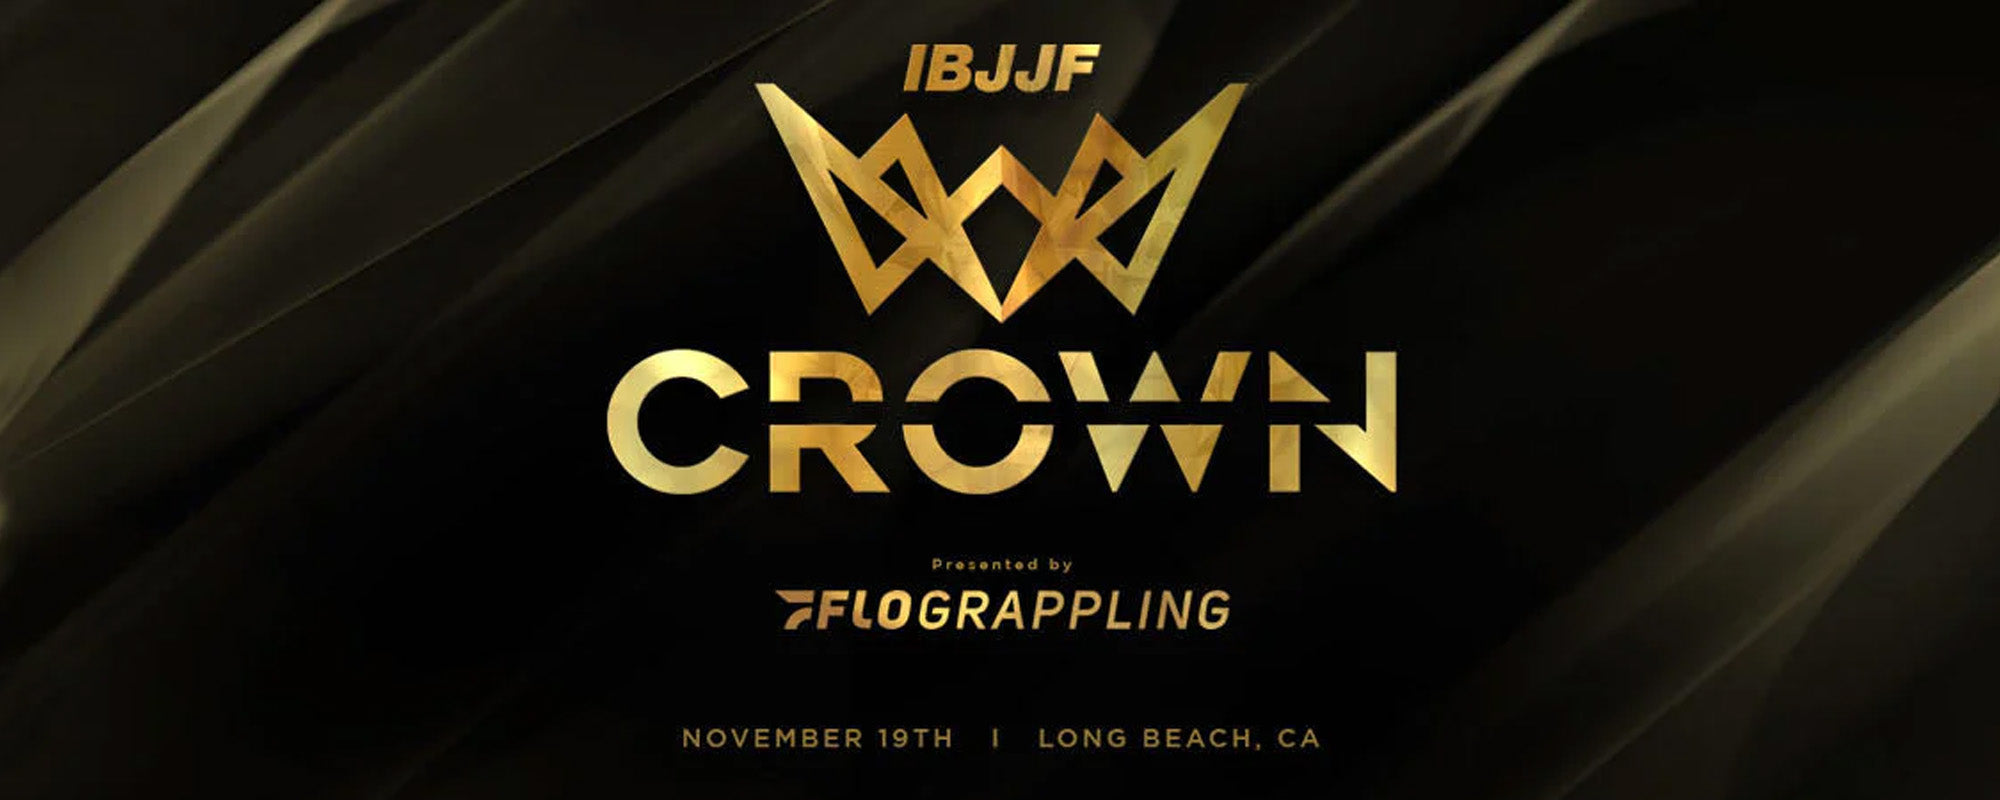 IBJJF Release Brackets For The Crown